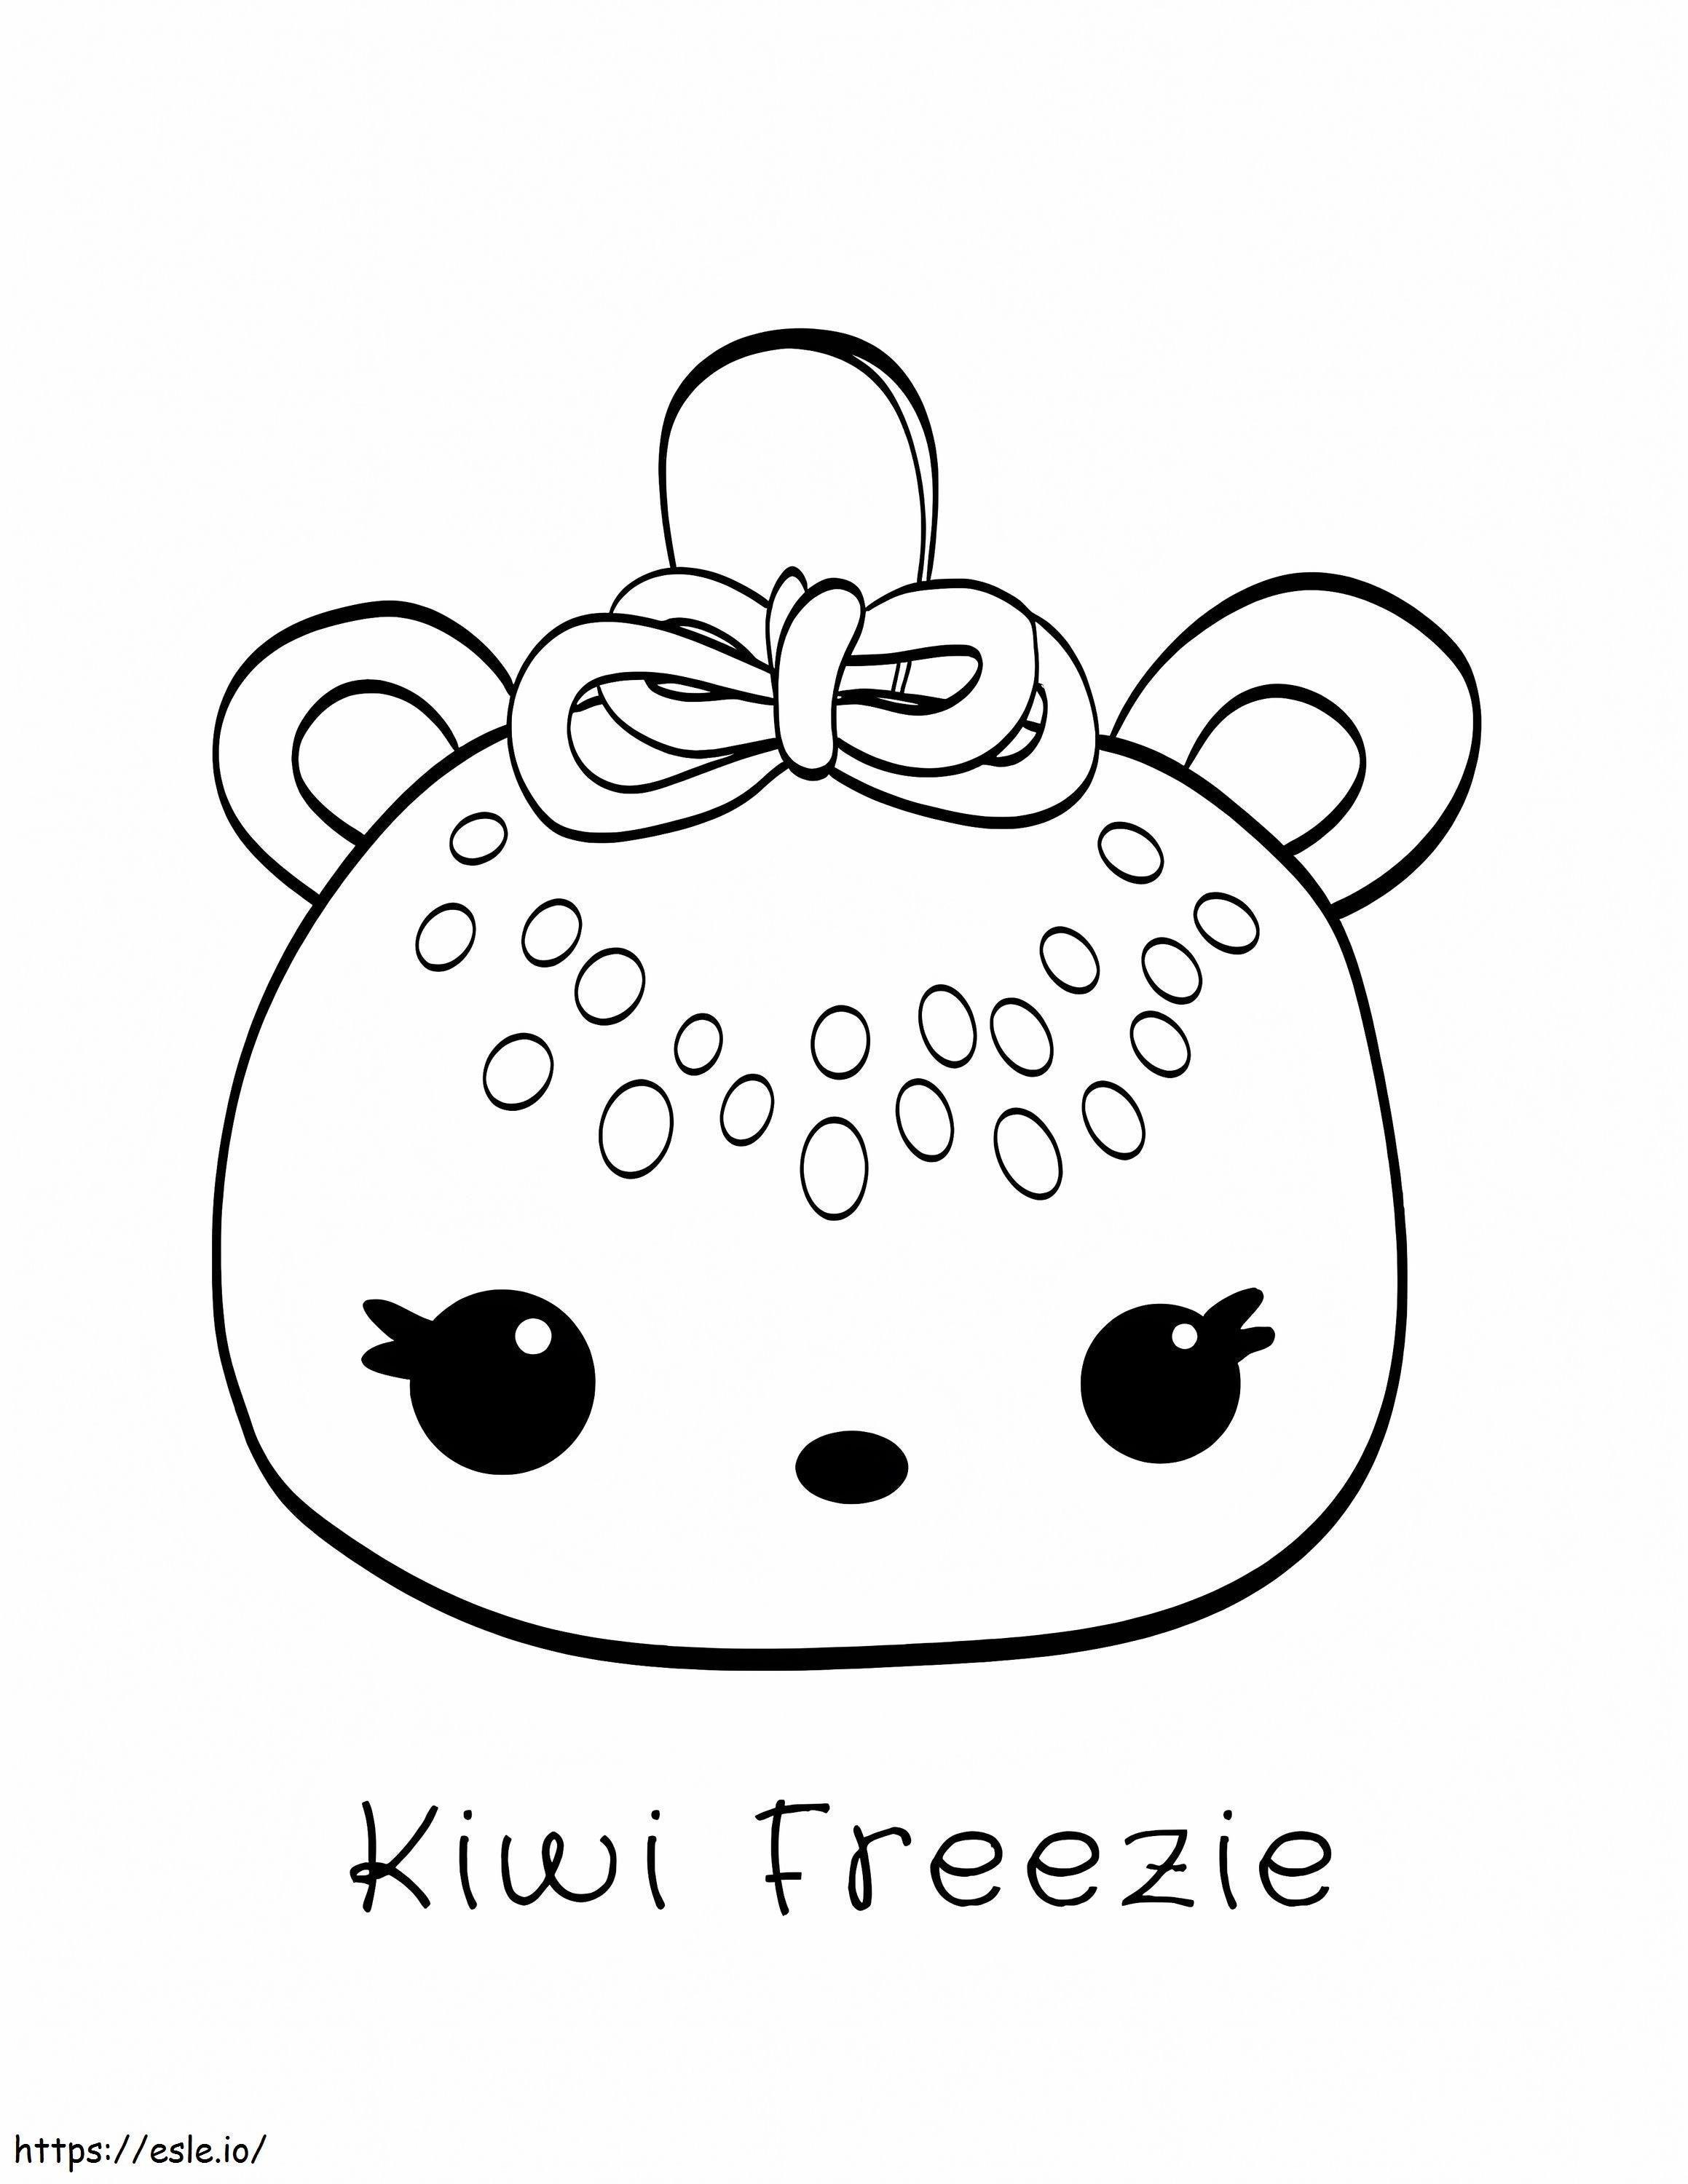 Freezie de kiwi para colorear